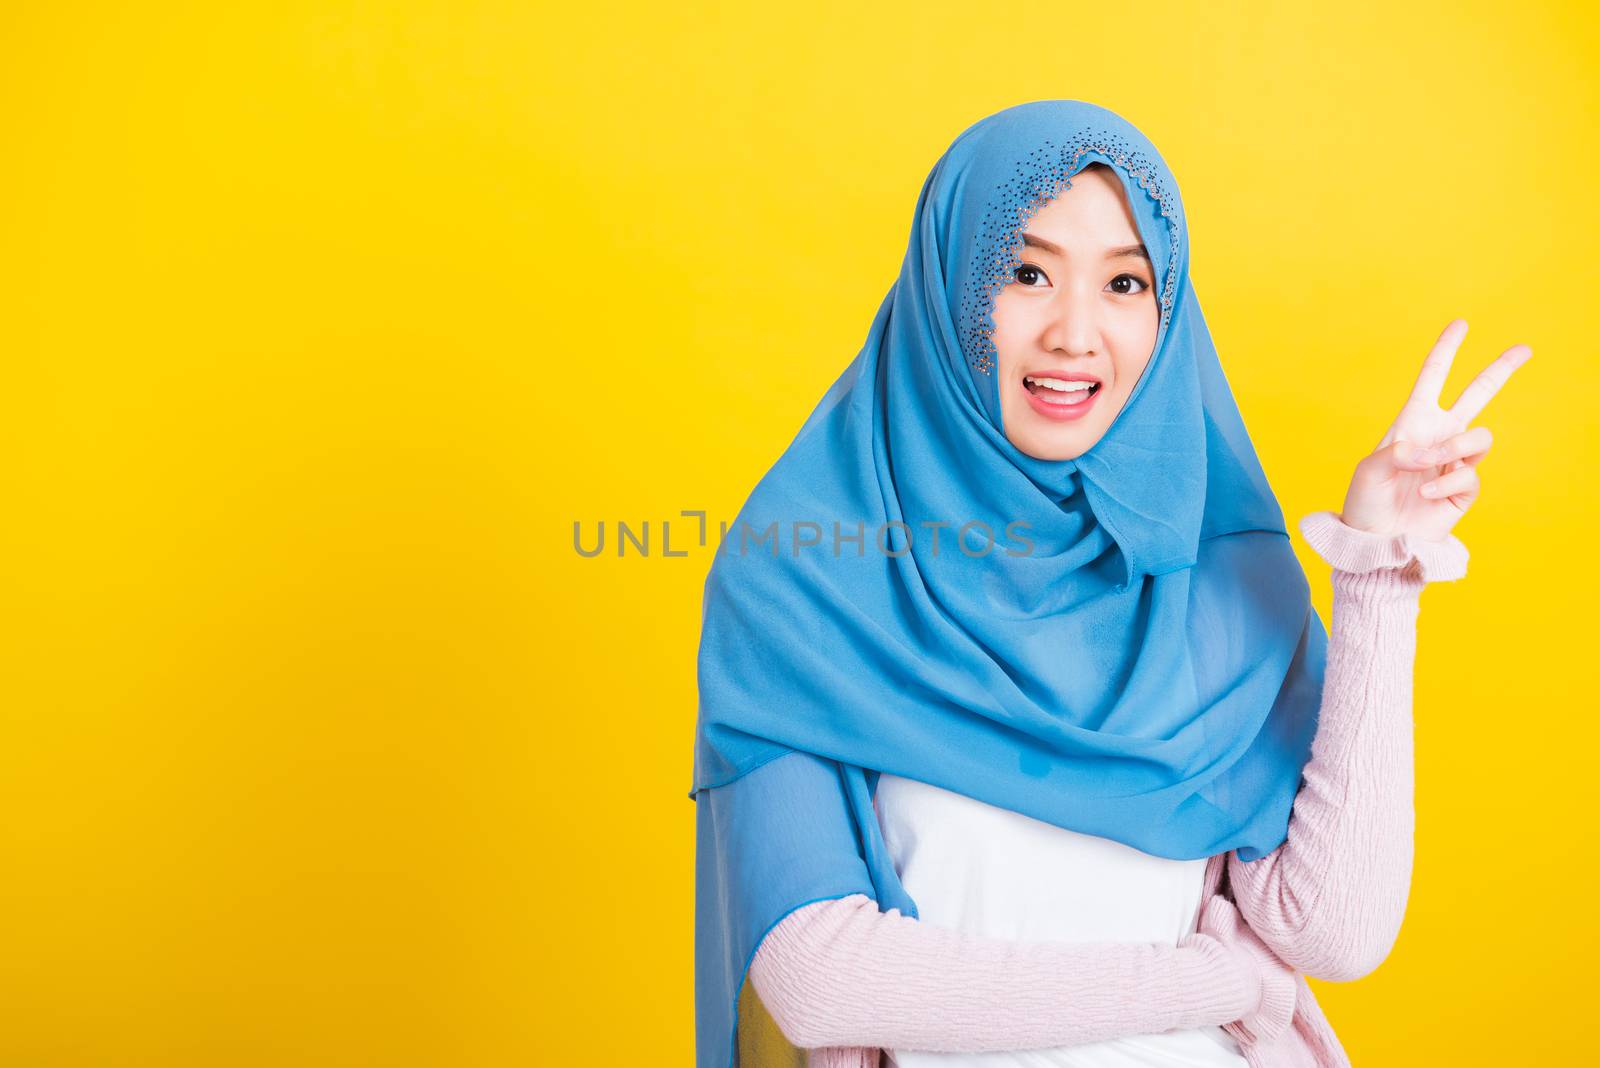 Asian Muslim Arab woman Islam wear hijab smile she showing gestu by Sorapop